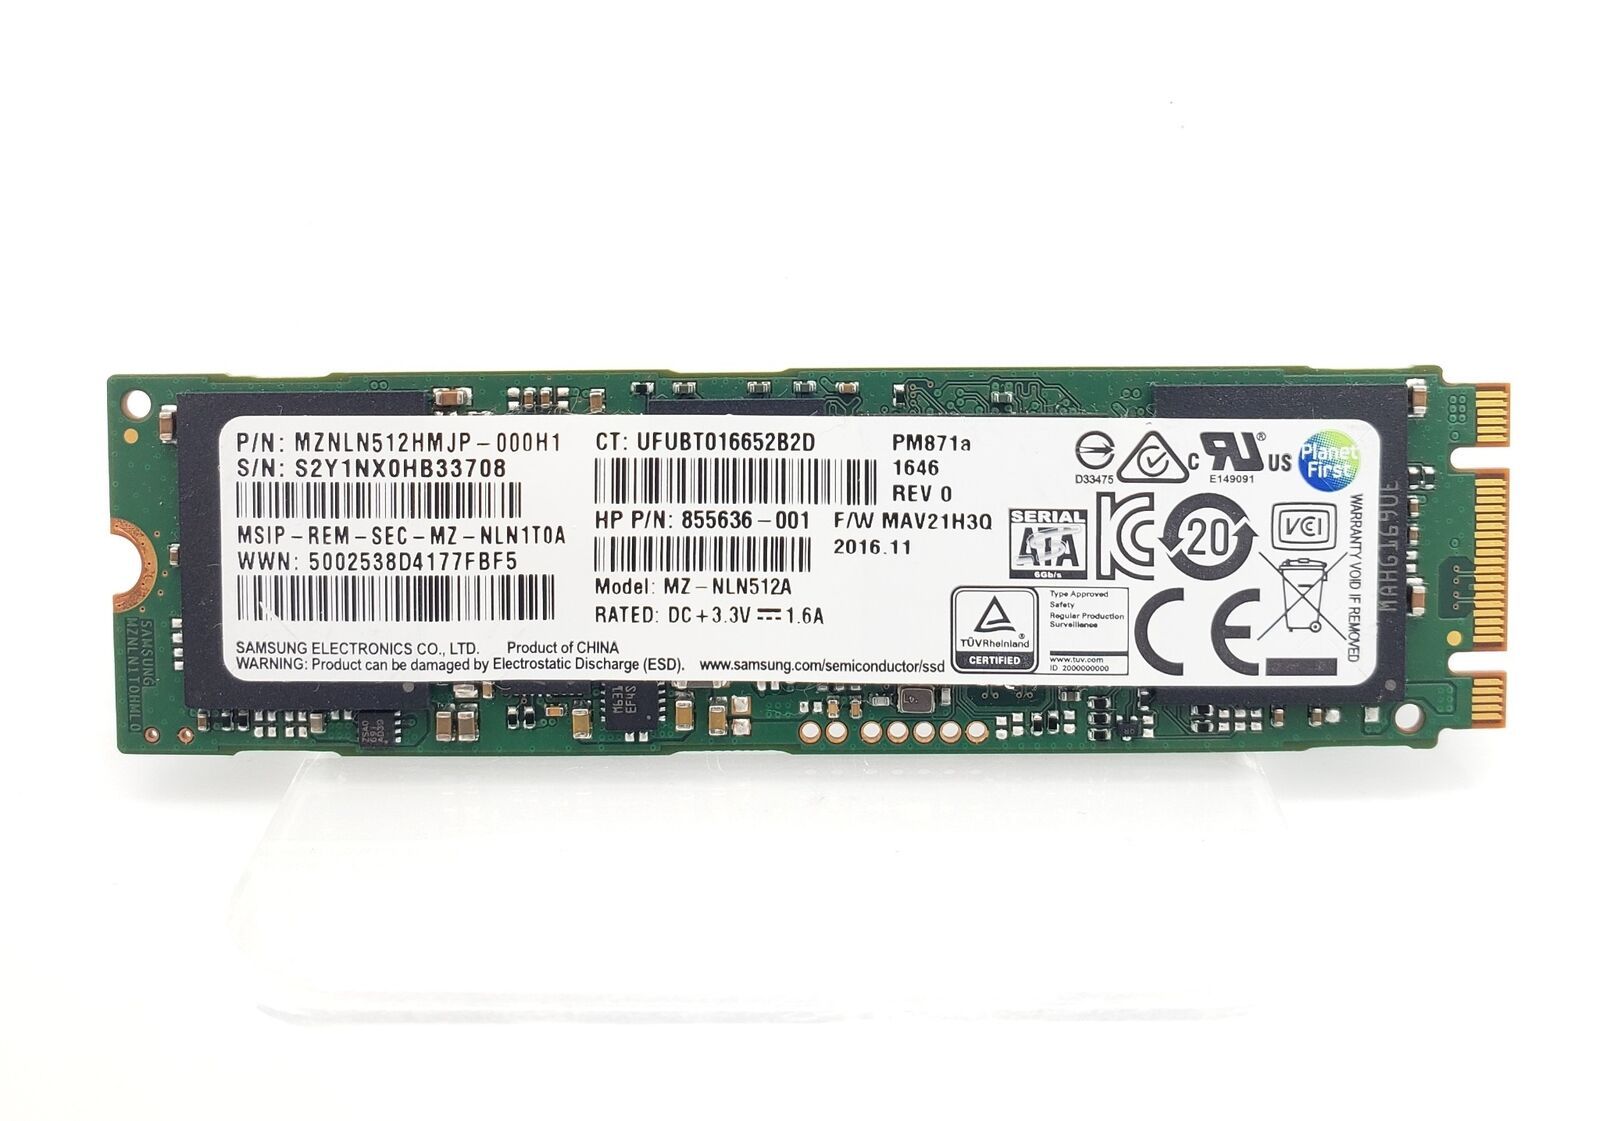 SAMSUNG PM871a MZ-NLN512A SSD 512GB M.2 855636-001 MZNLN512HMJP-000H1